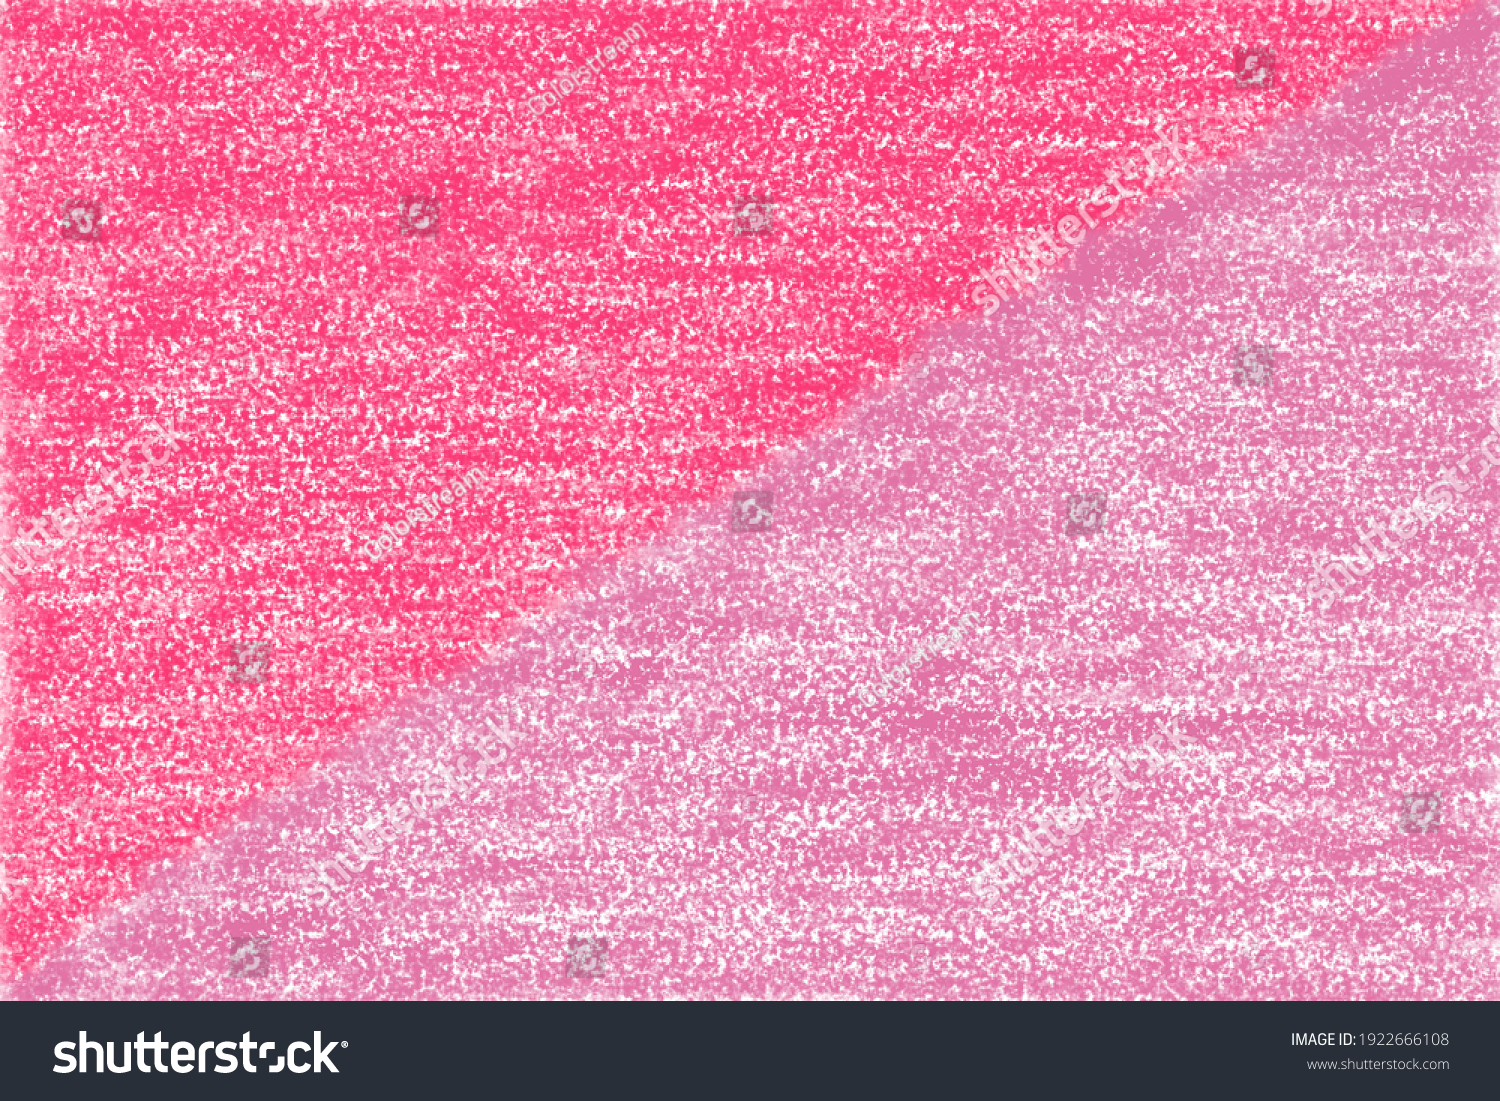 3dRose Single Toggle Switch Pink Shiny Glitter Confetti Polkadot on Silver Metal Foil Effect Print lsp_267059_1 